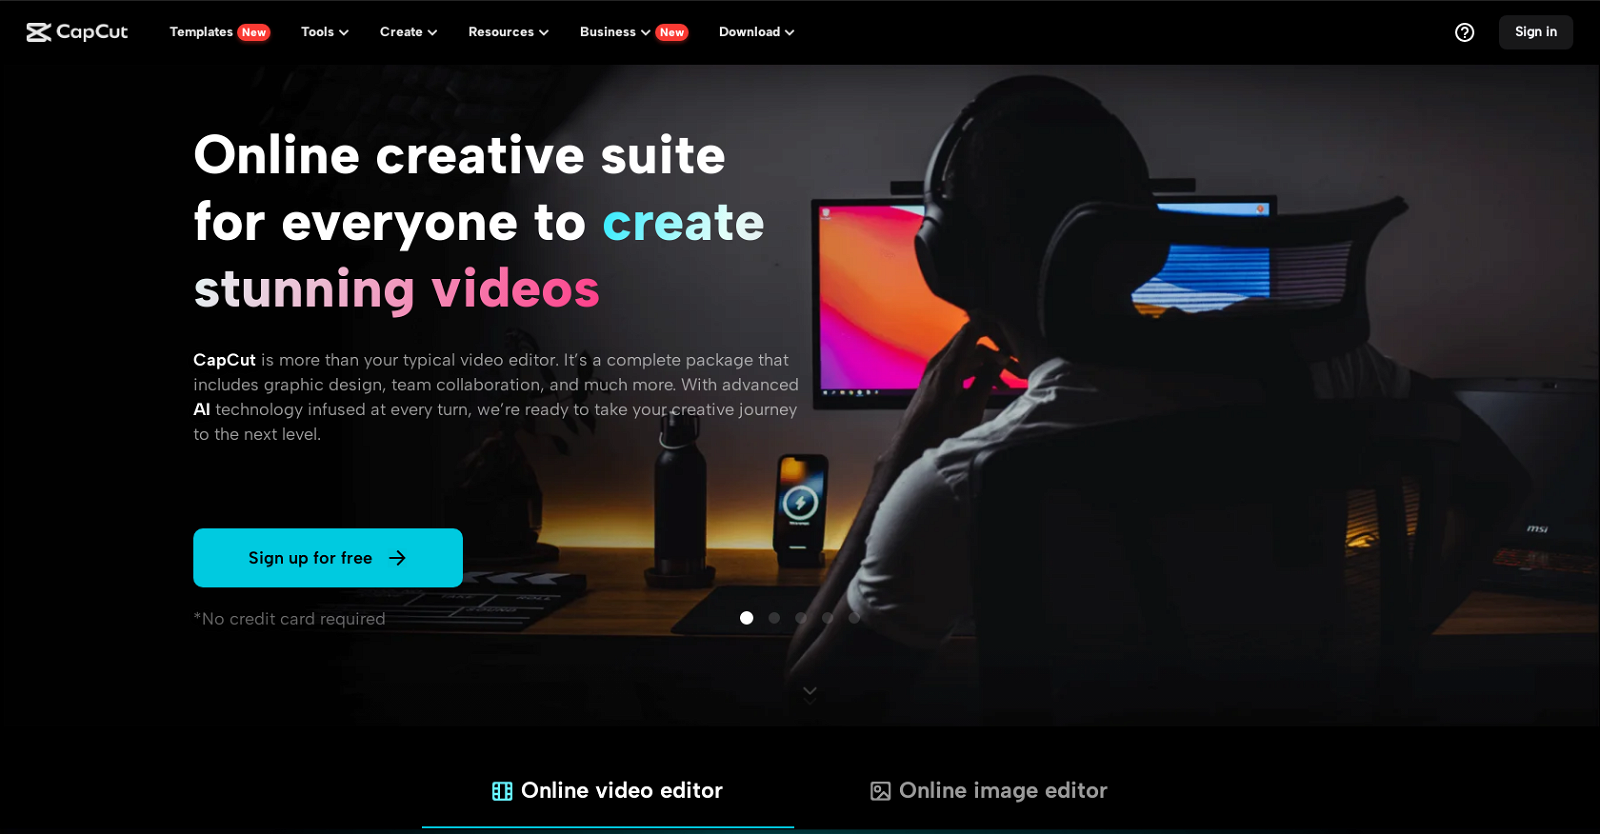 CapCut Online Creative Suite website